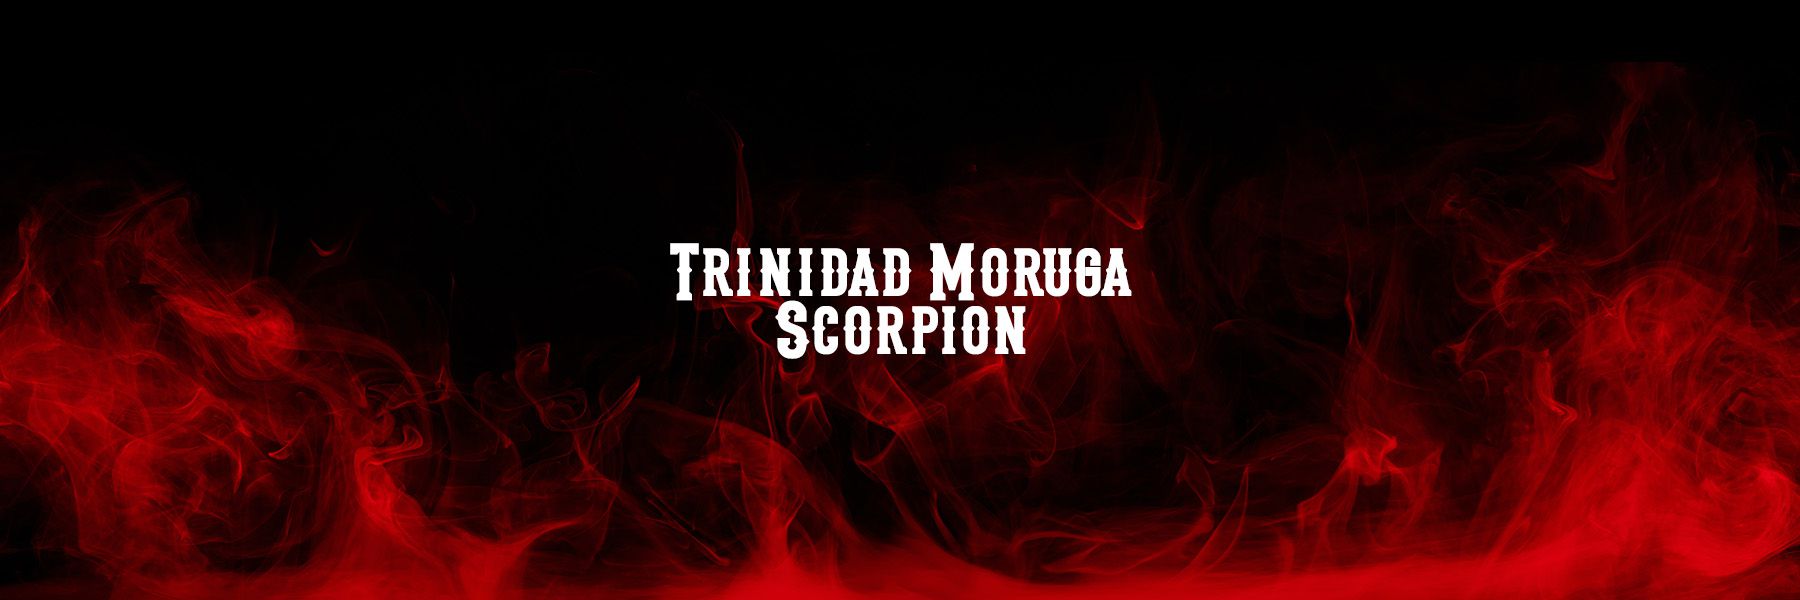 Trinidad Moruga Scorpion